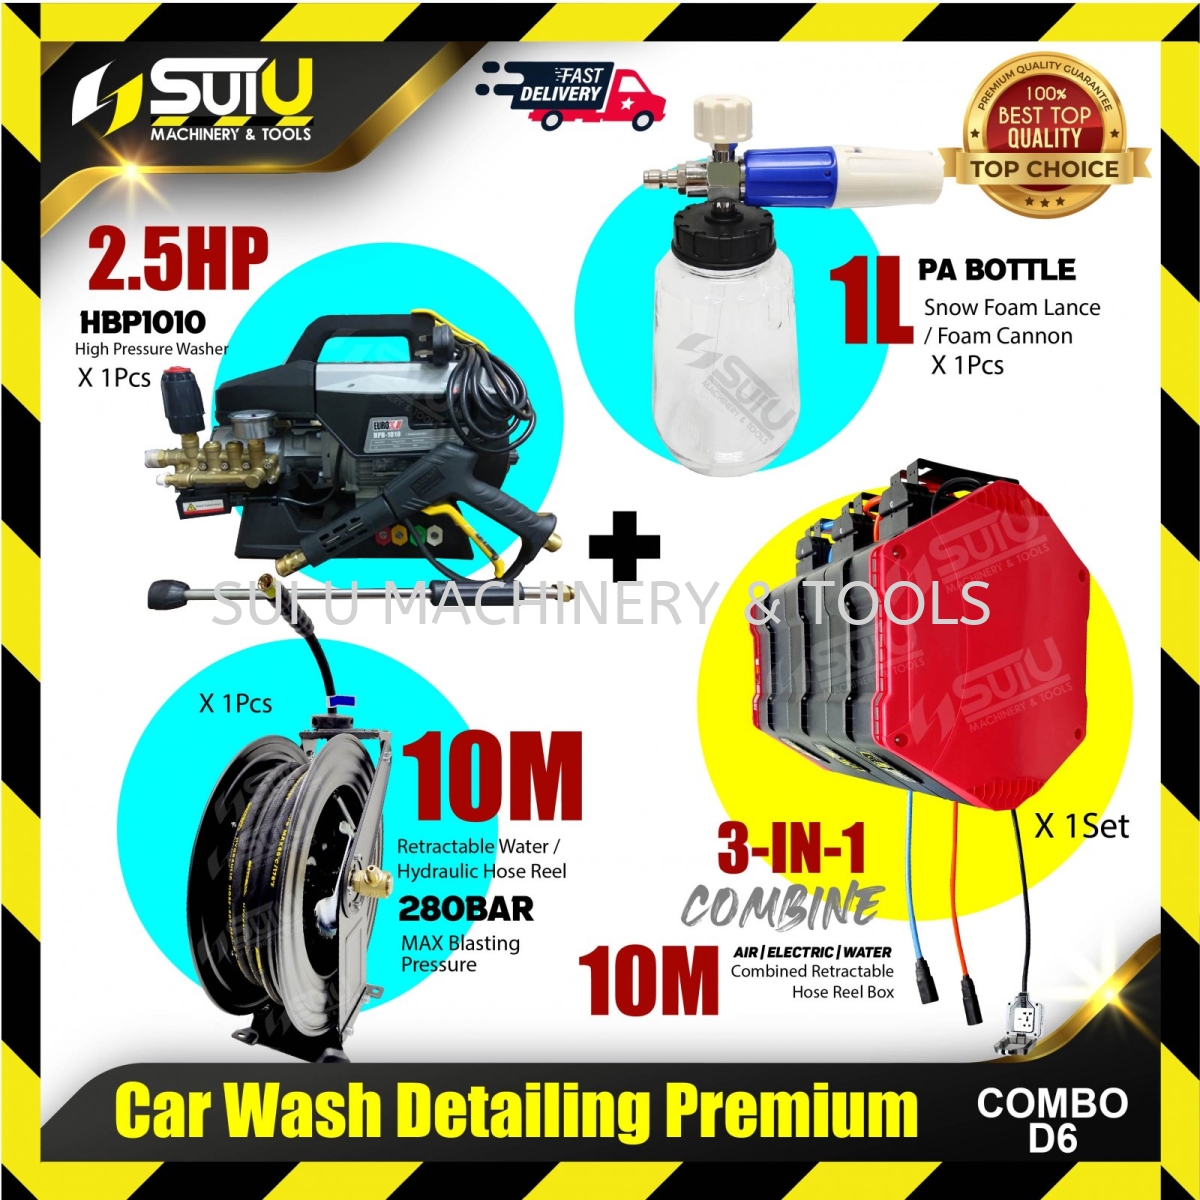 COMBO D6] Car Wash Detailing Premium Combo (HBP1010 + 1L Foam